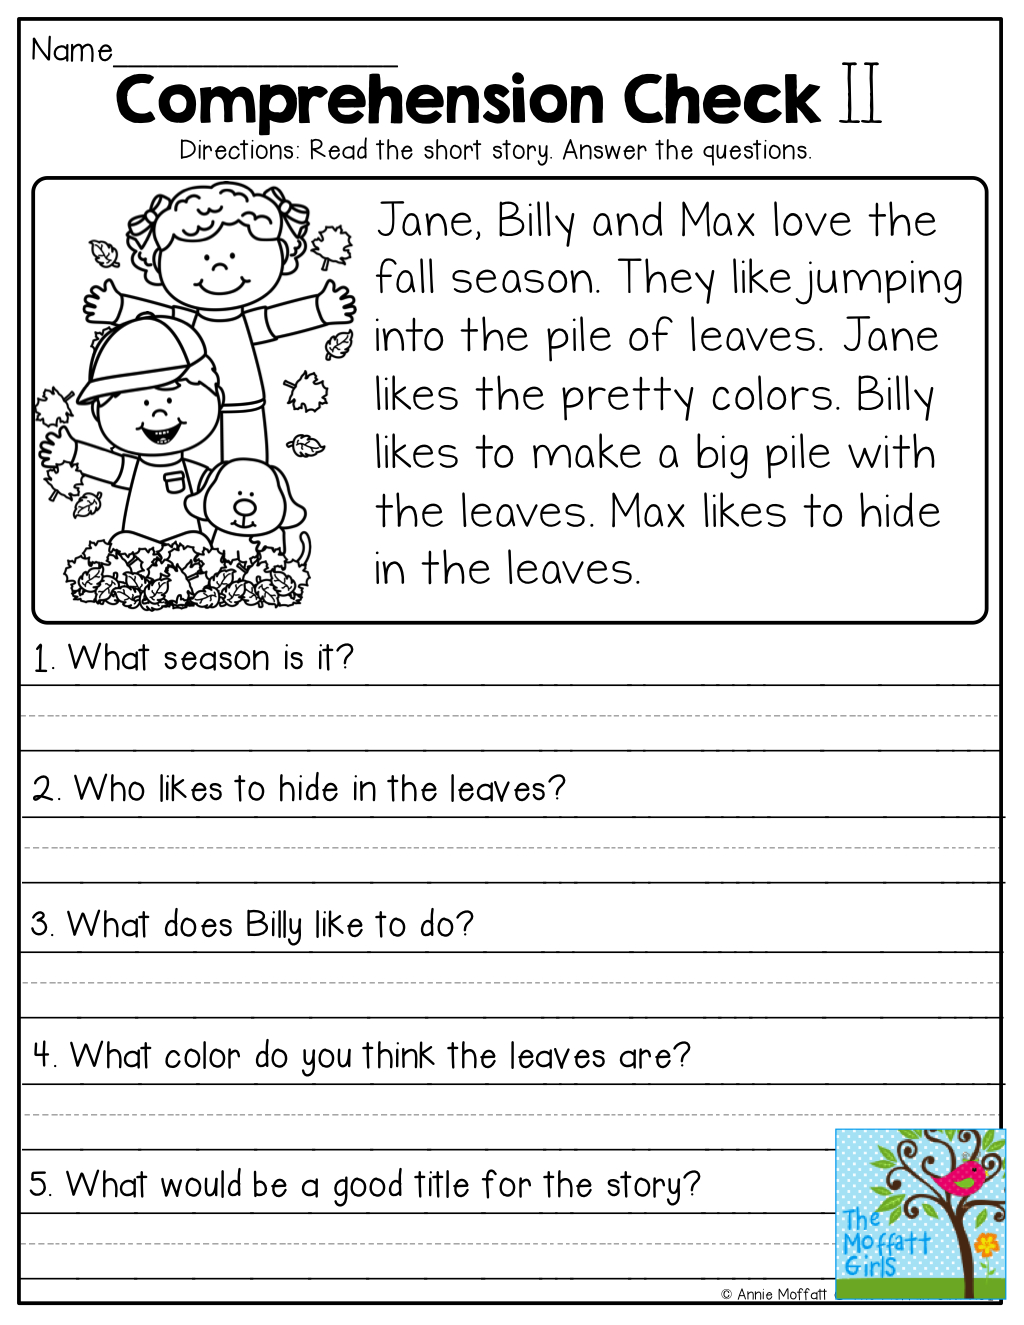 reading-comprehension-free-worksheets-5th-grade-printable-worksheets